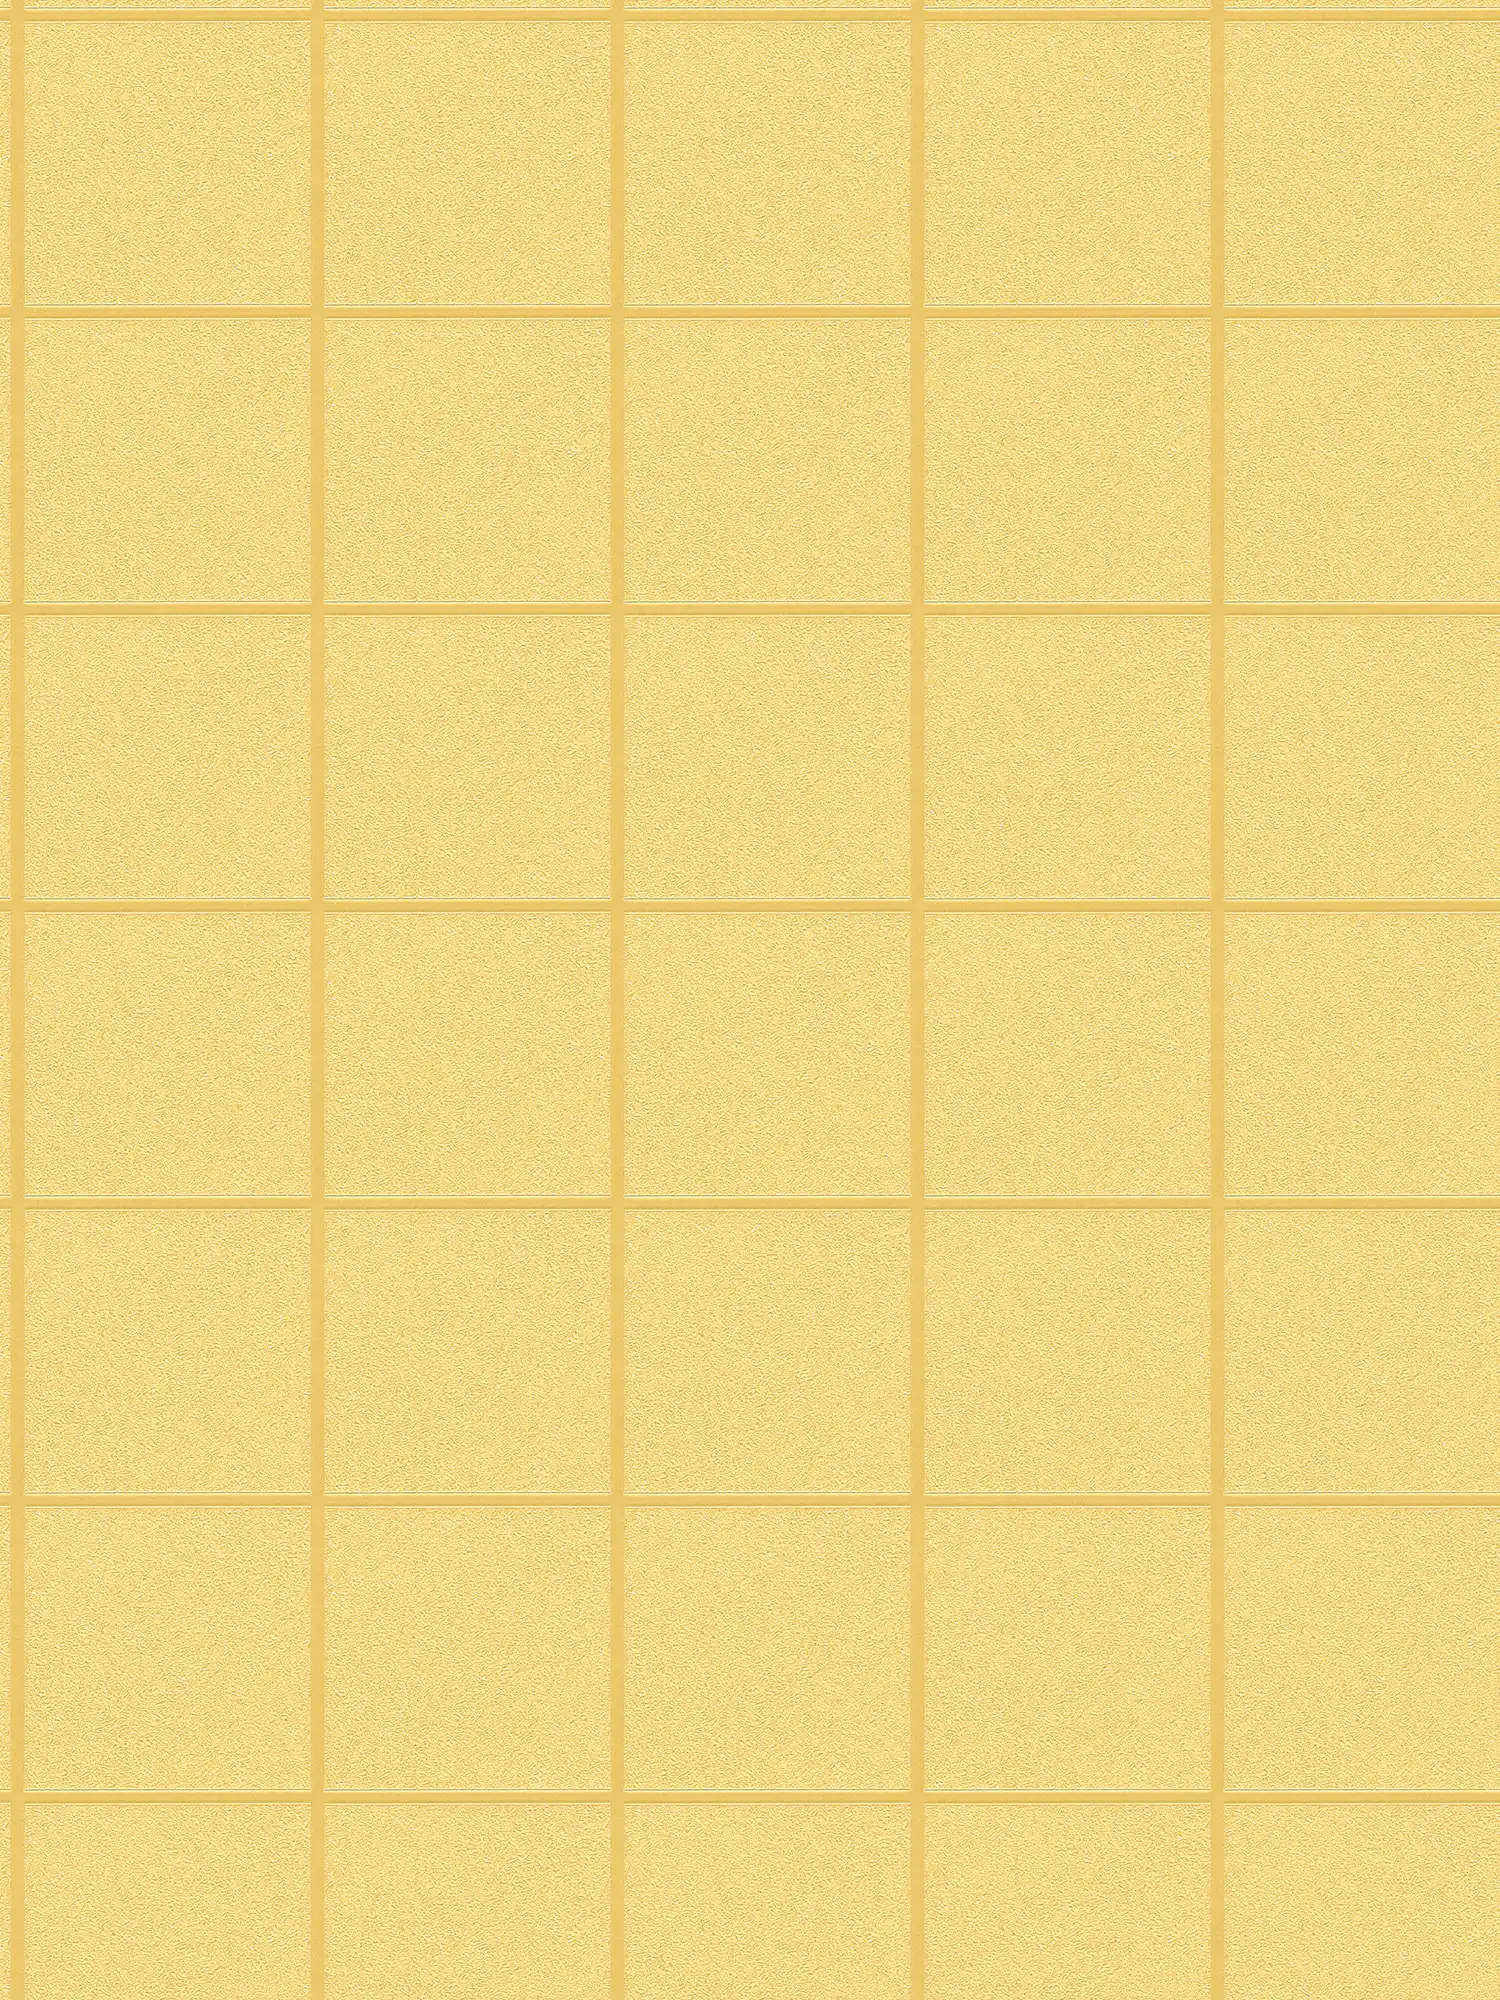 Wallpaper tile pattern, dark joints & 3D effect - gold, yellow
